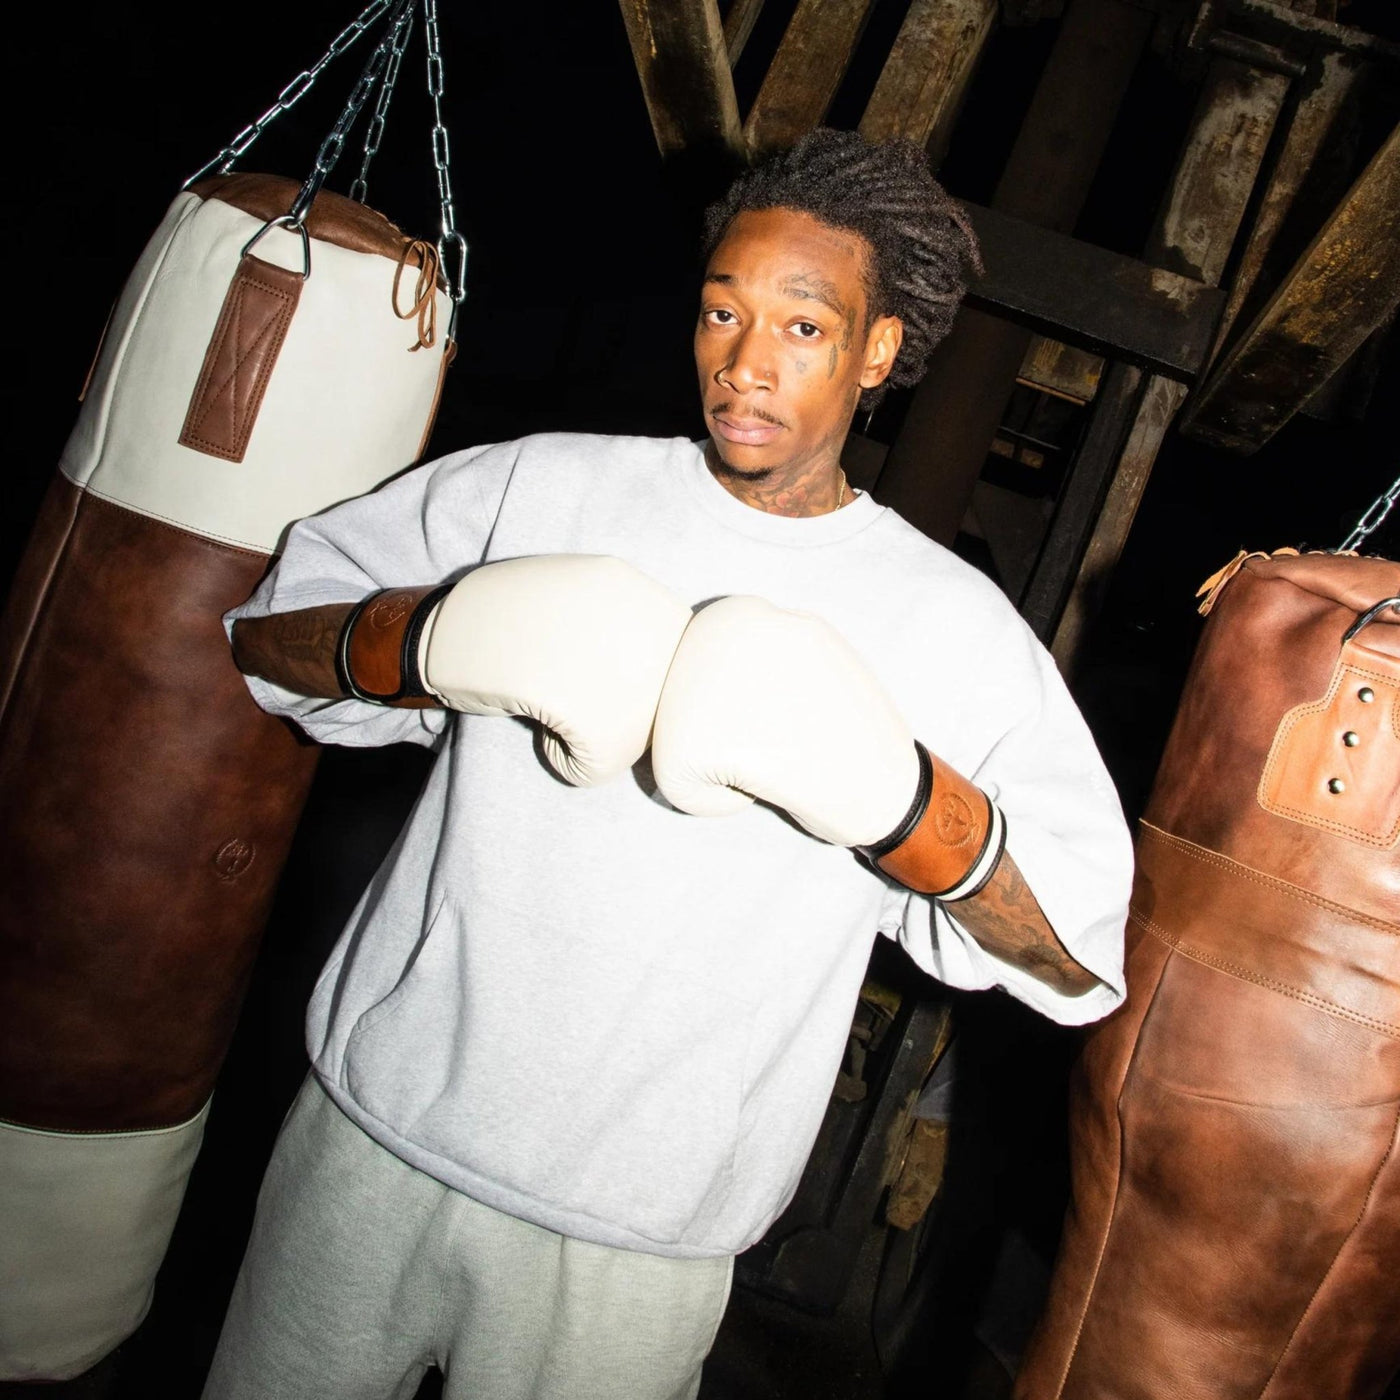 PRO Cream / Brown Leather Boxing Gloves (Strap Up) - MODEST VINTAGE PLAYER LTD